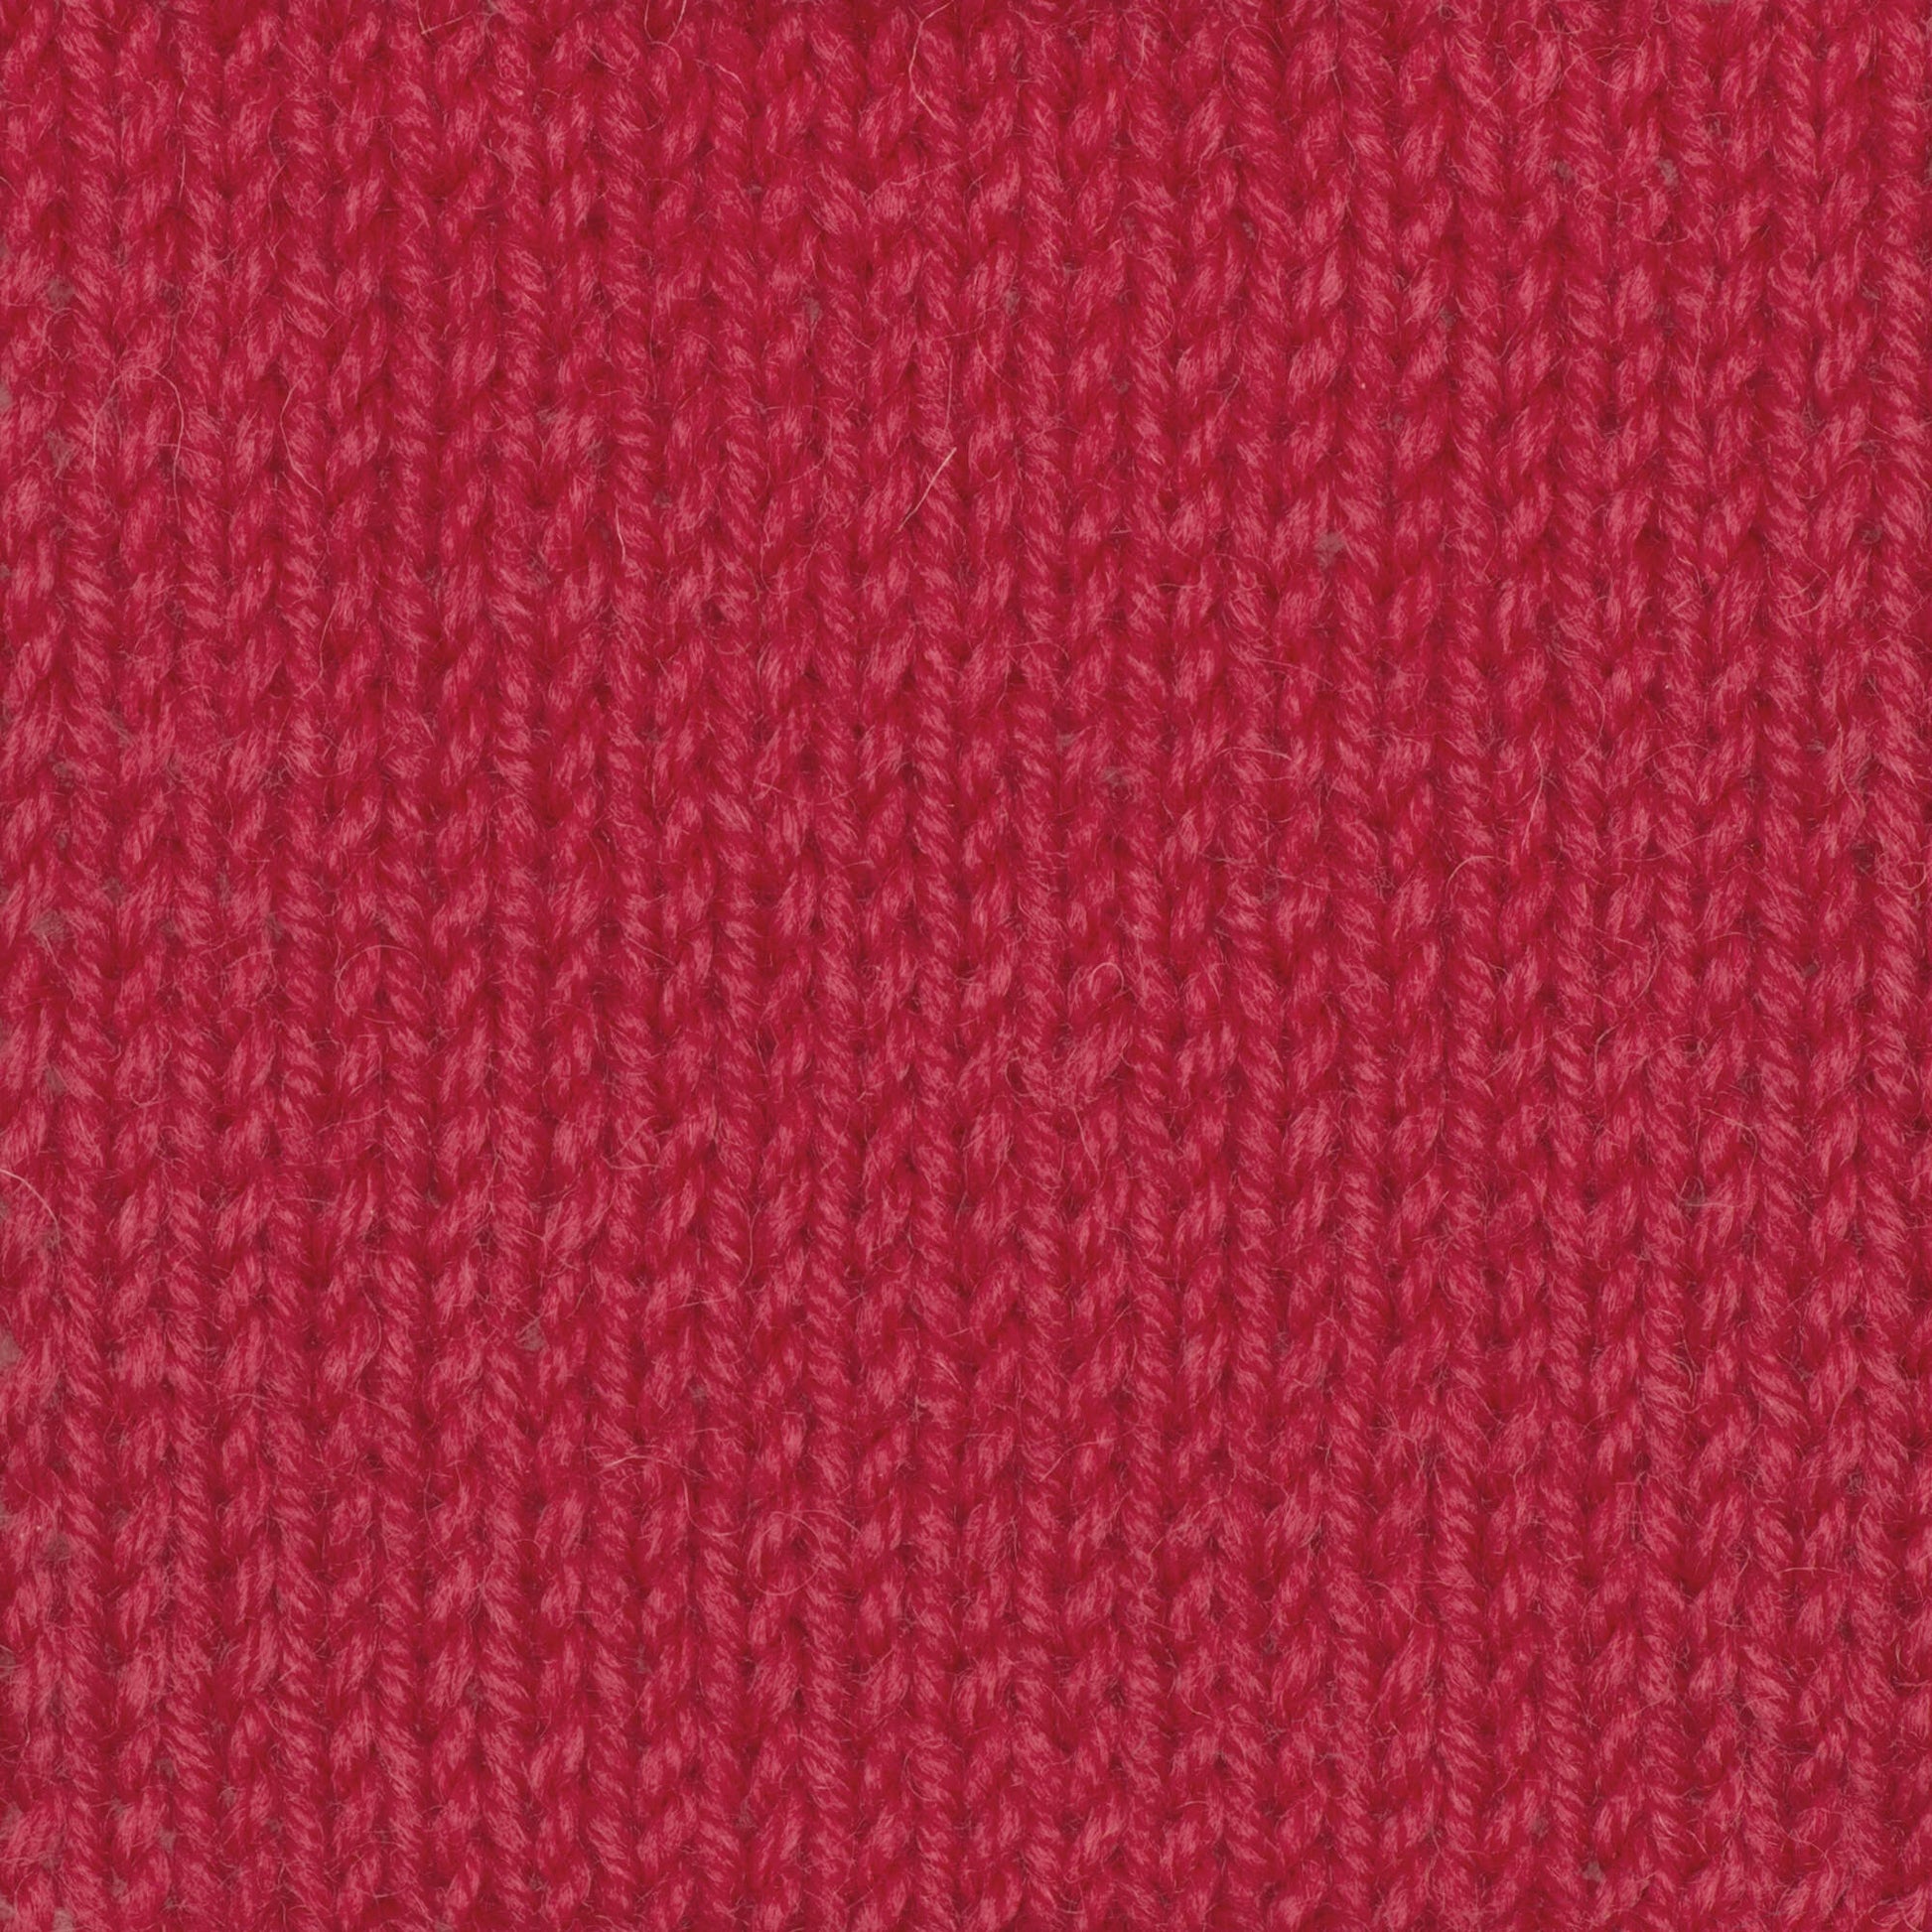 Patons Classic Wool DK Superwash Yarn - Discontinued Shades